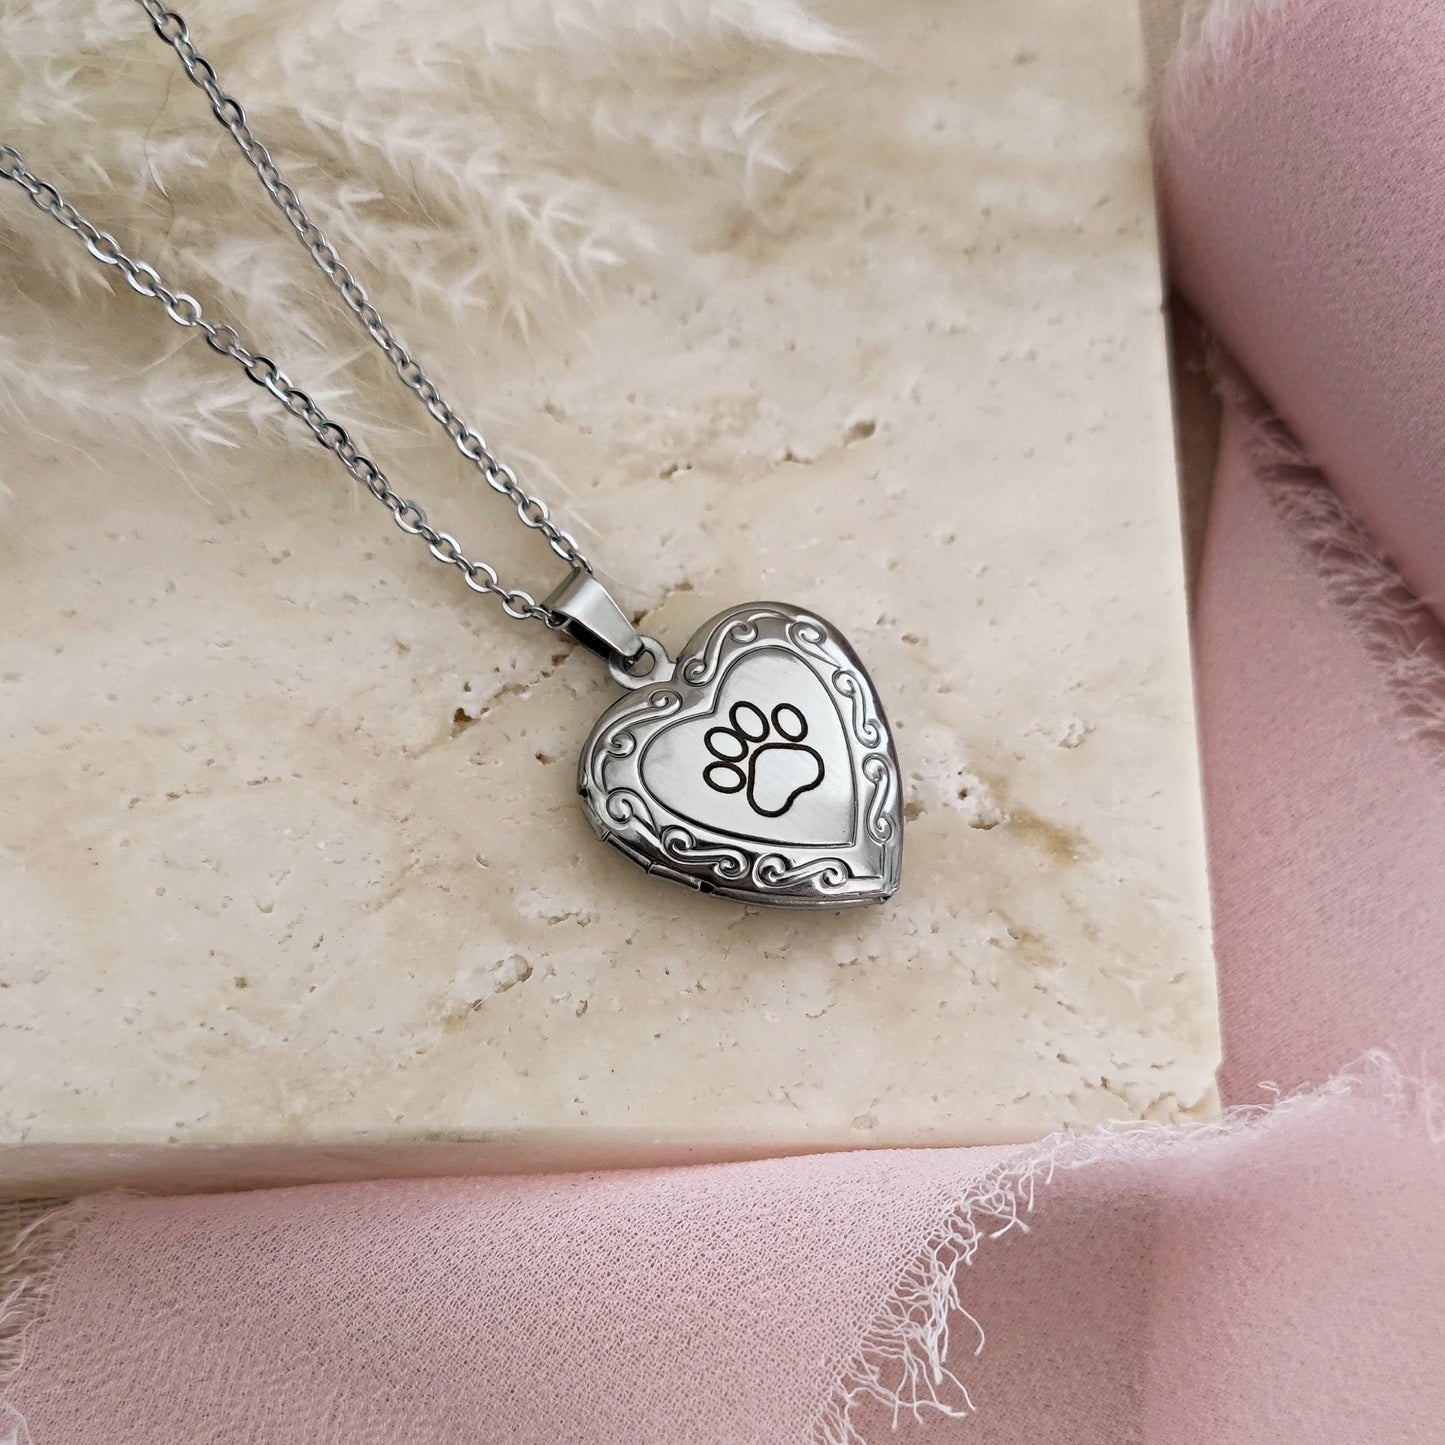 "Pawprint" Heart locket necklace